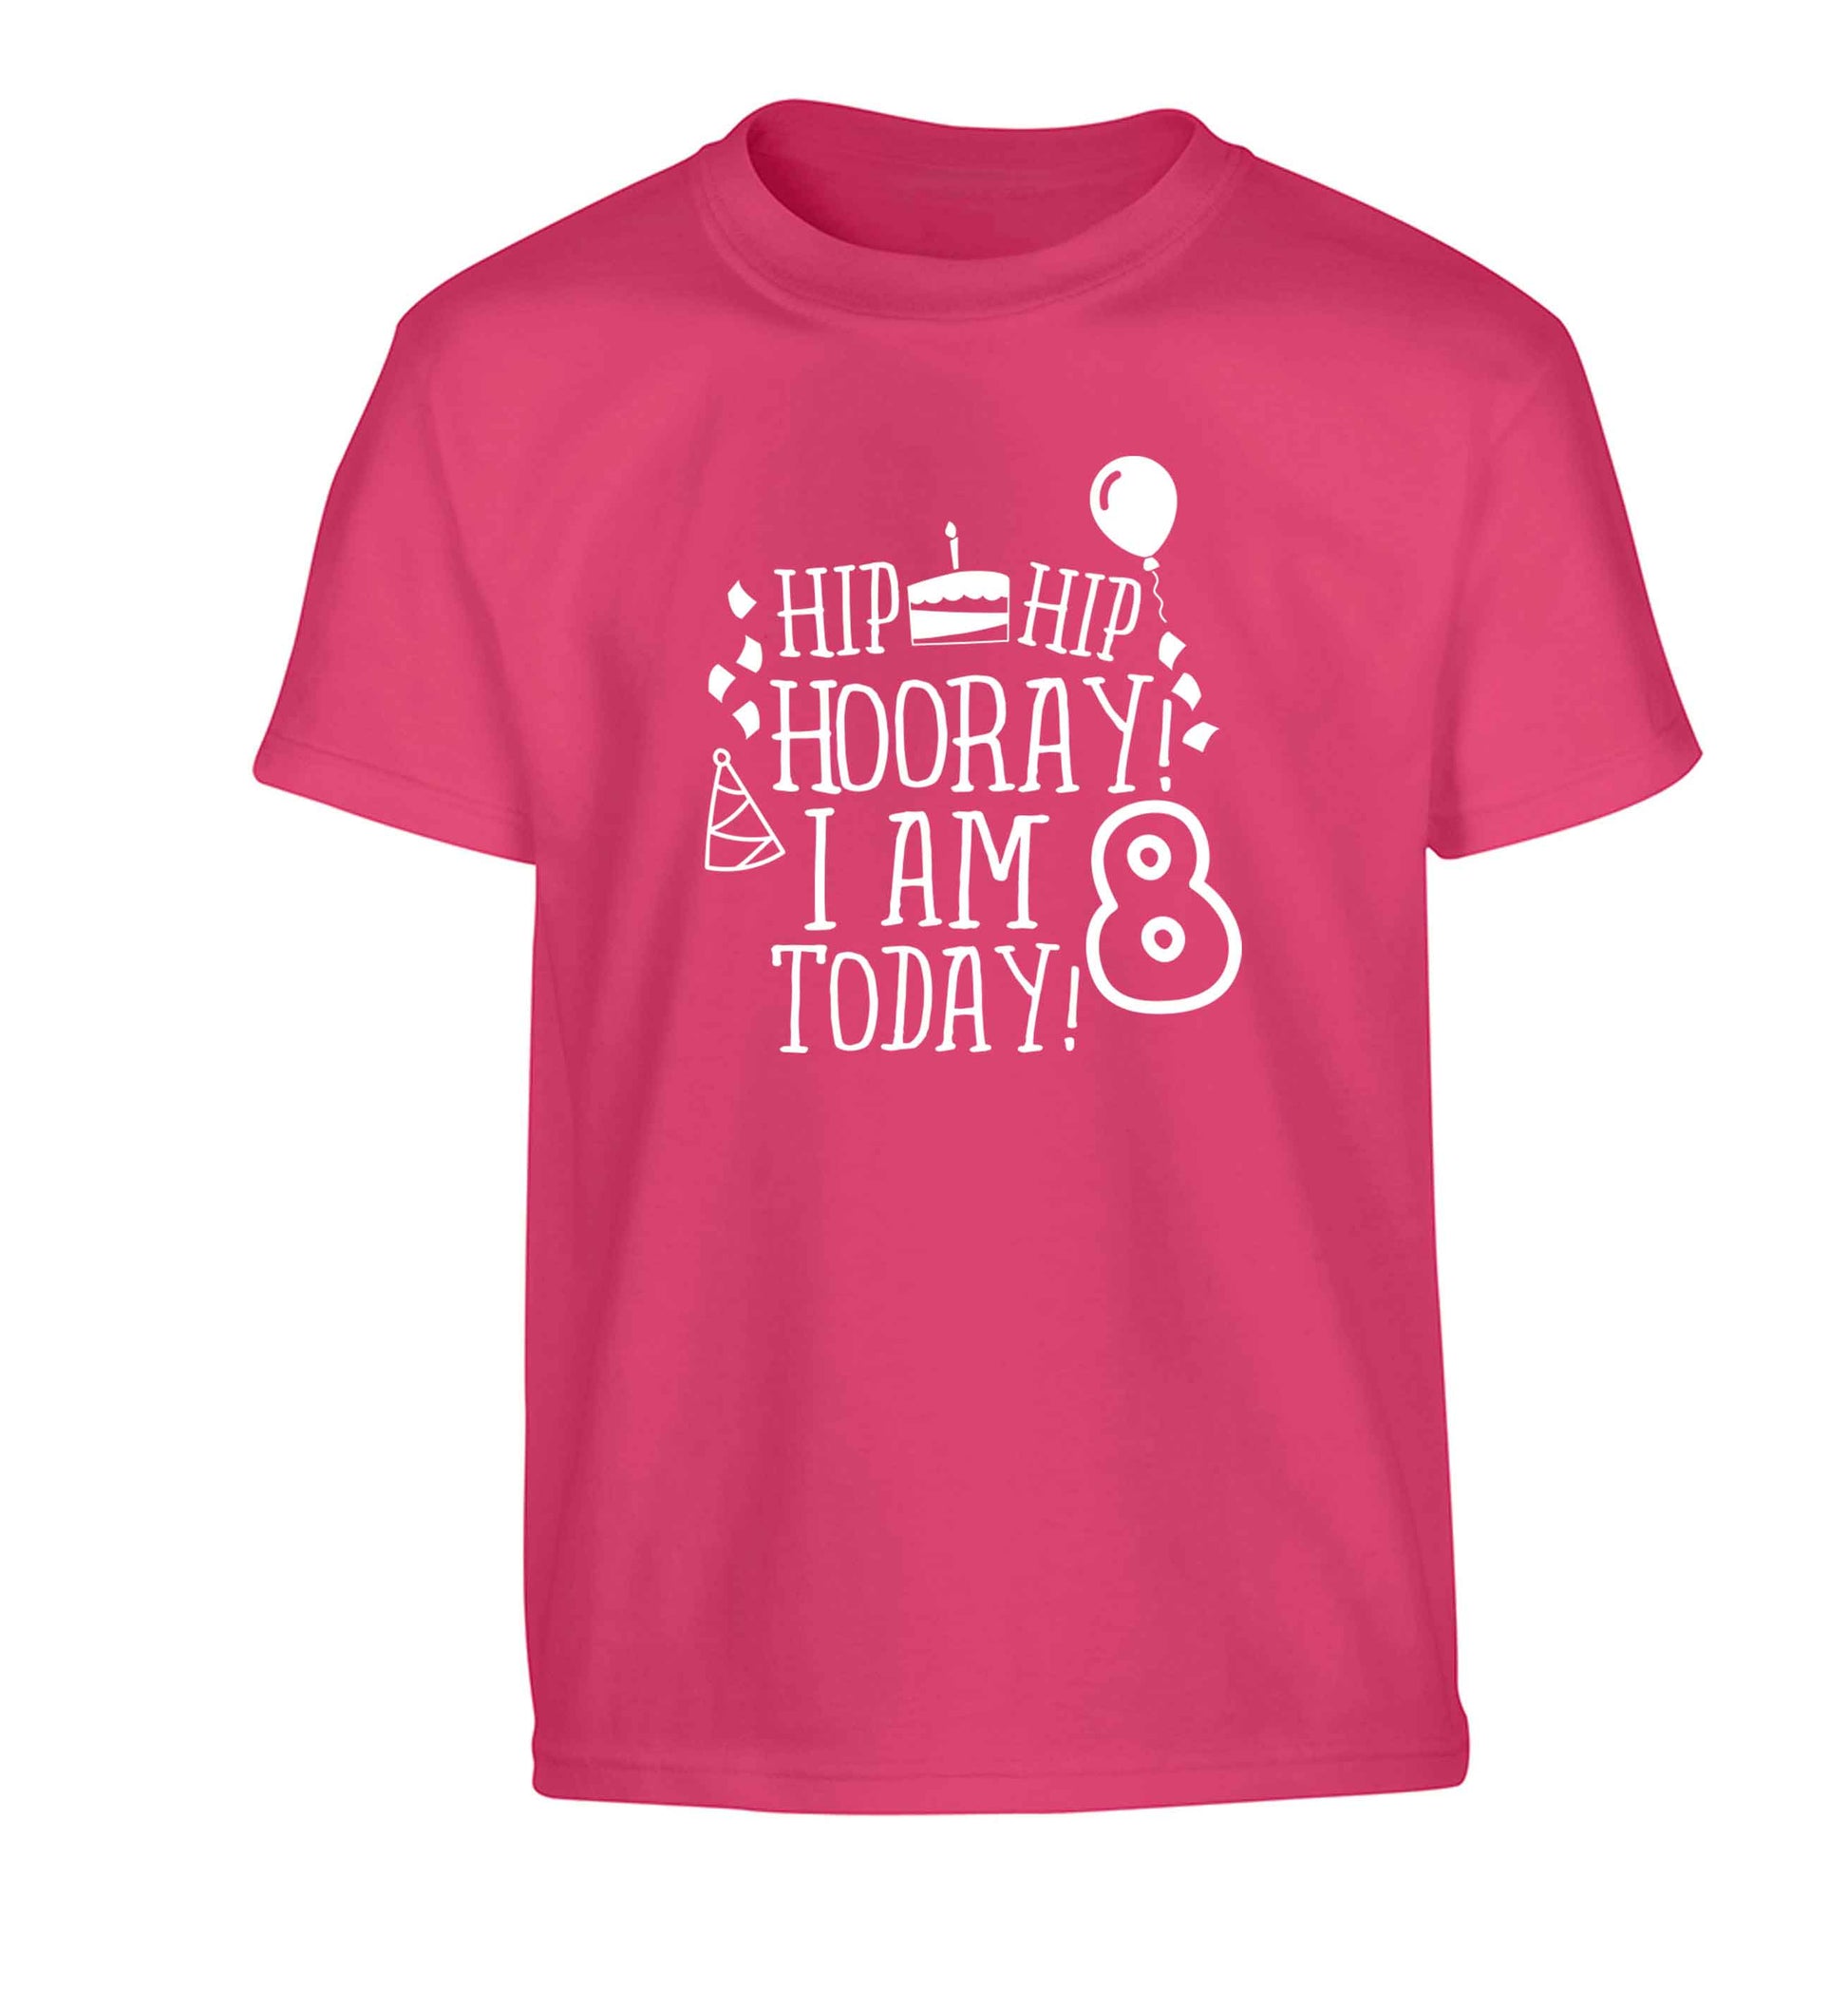 Hip hip hooray I am 8 today! Children's pink Tshirt 12-13 Years